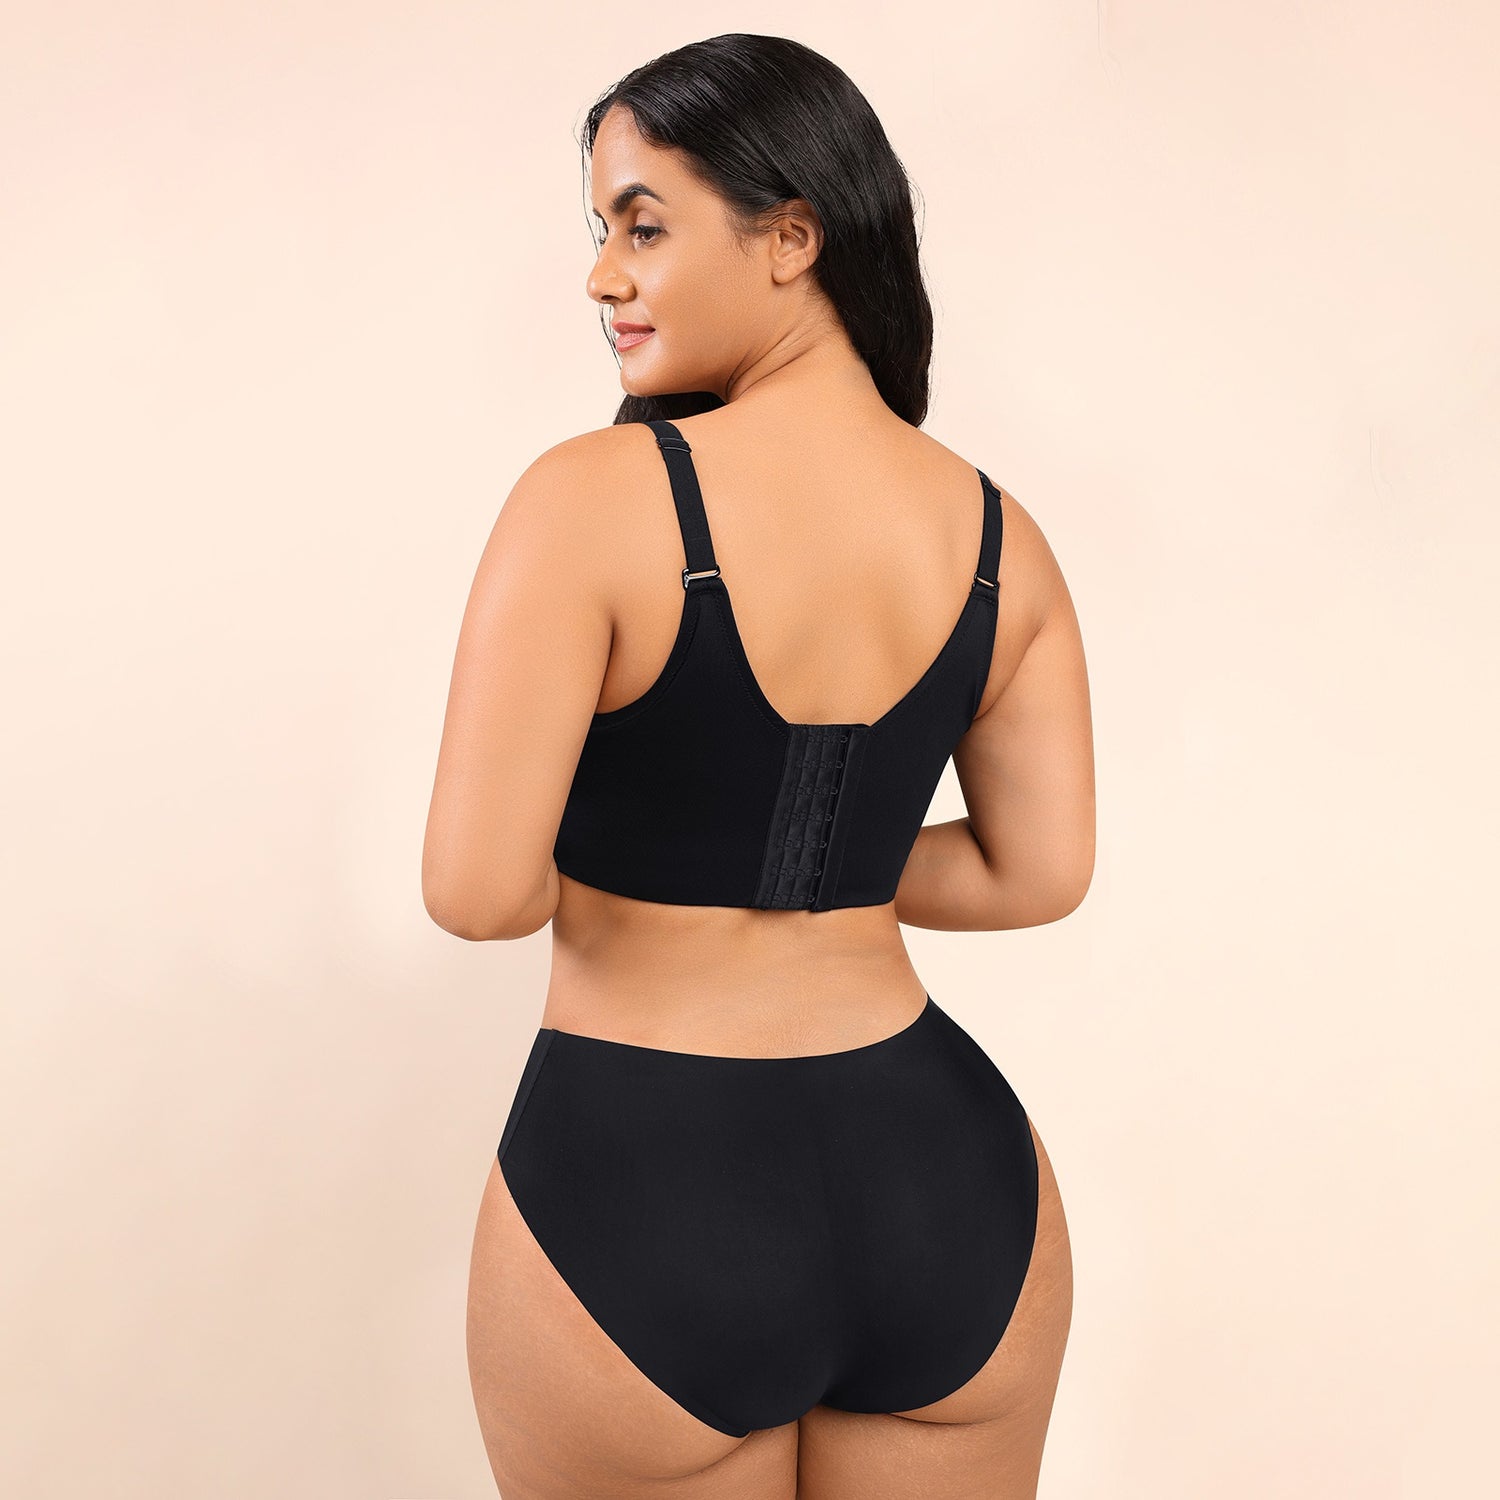 Back Fat Support Bra – Girdles Plus